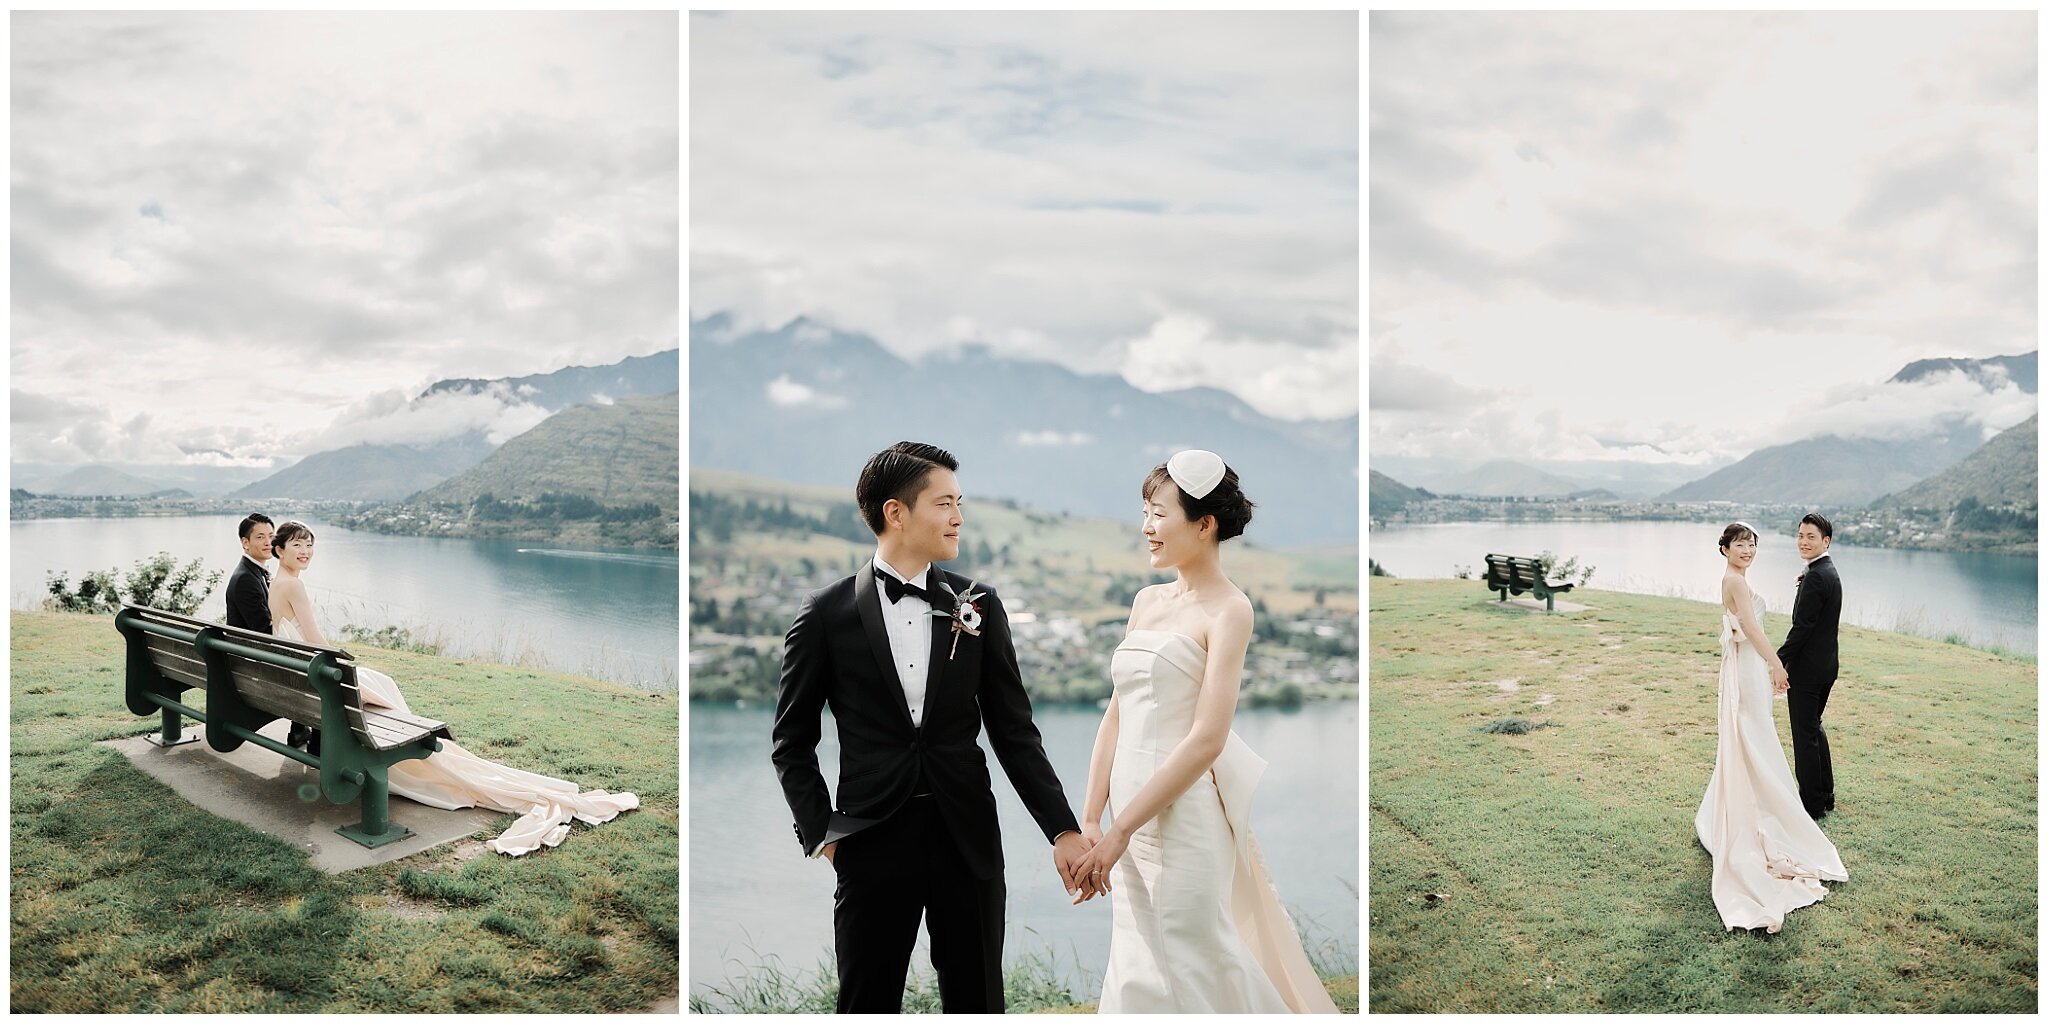 Queenstown and Lake Tekapo, New Zealand Pre-Wedding Shootクイーンズタウンとテカポ、ニュージーランドで撮る素敵な前撮りフォトウェディング ヘリウェディング　ウェディング (Copy)